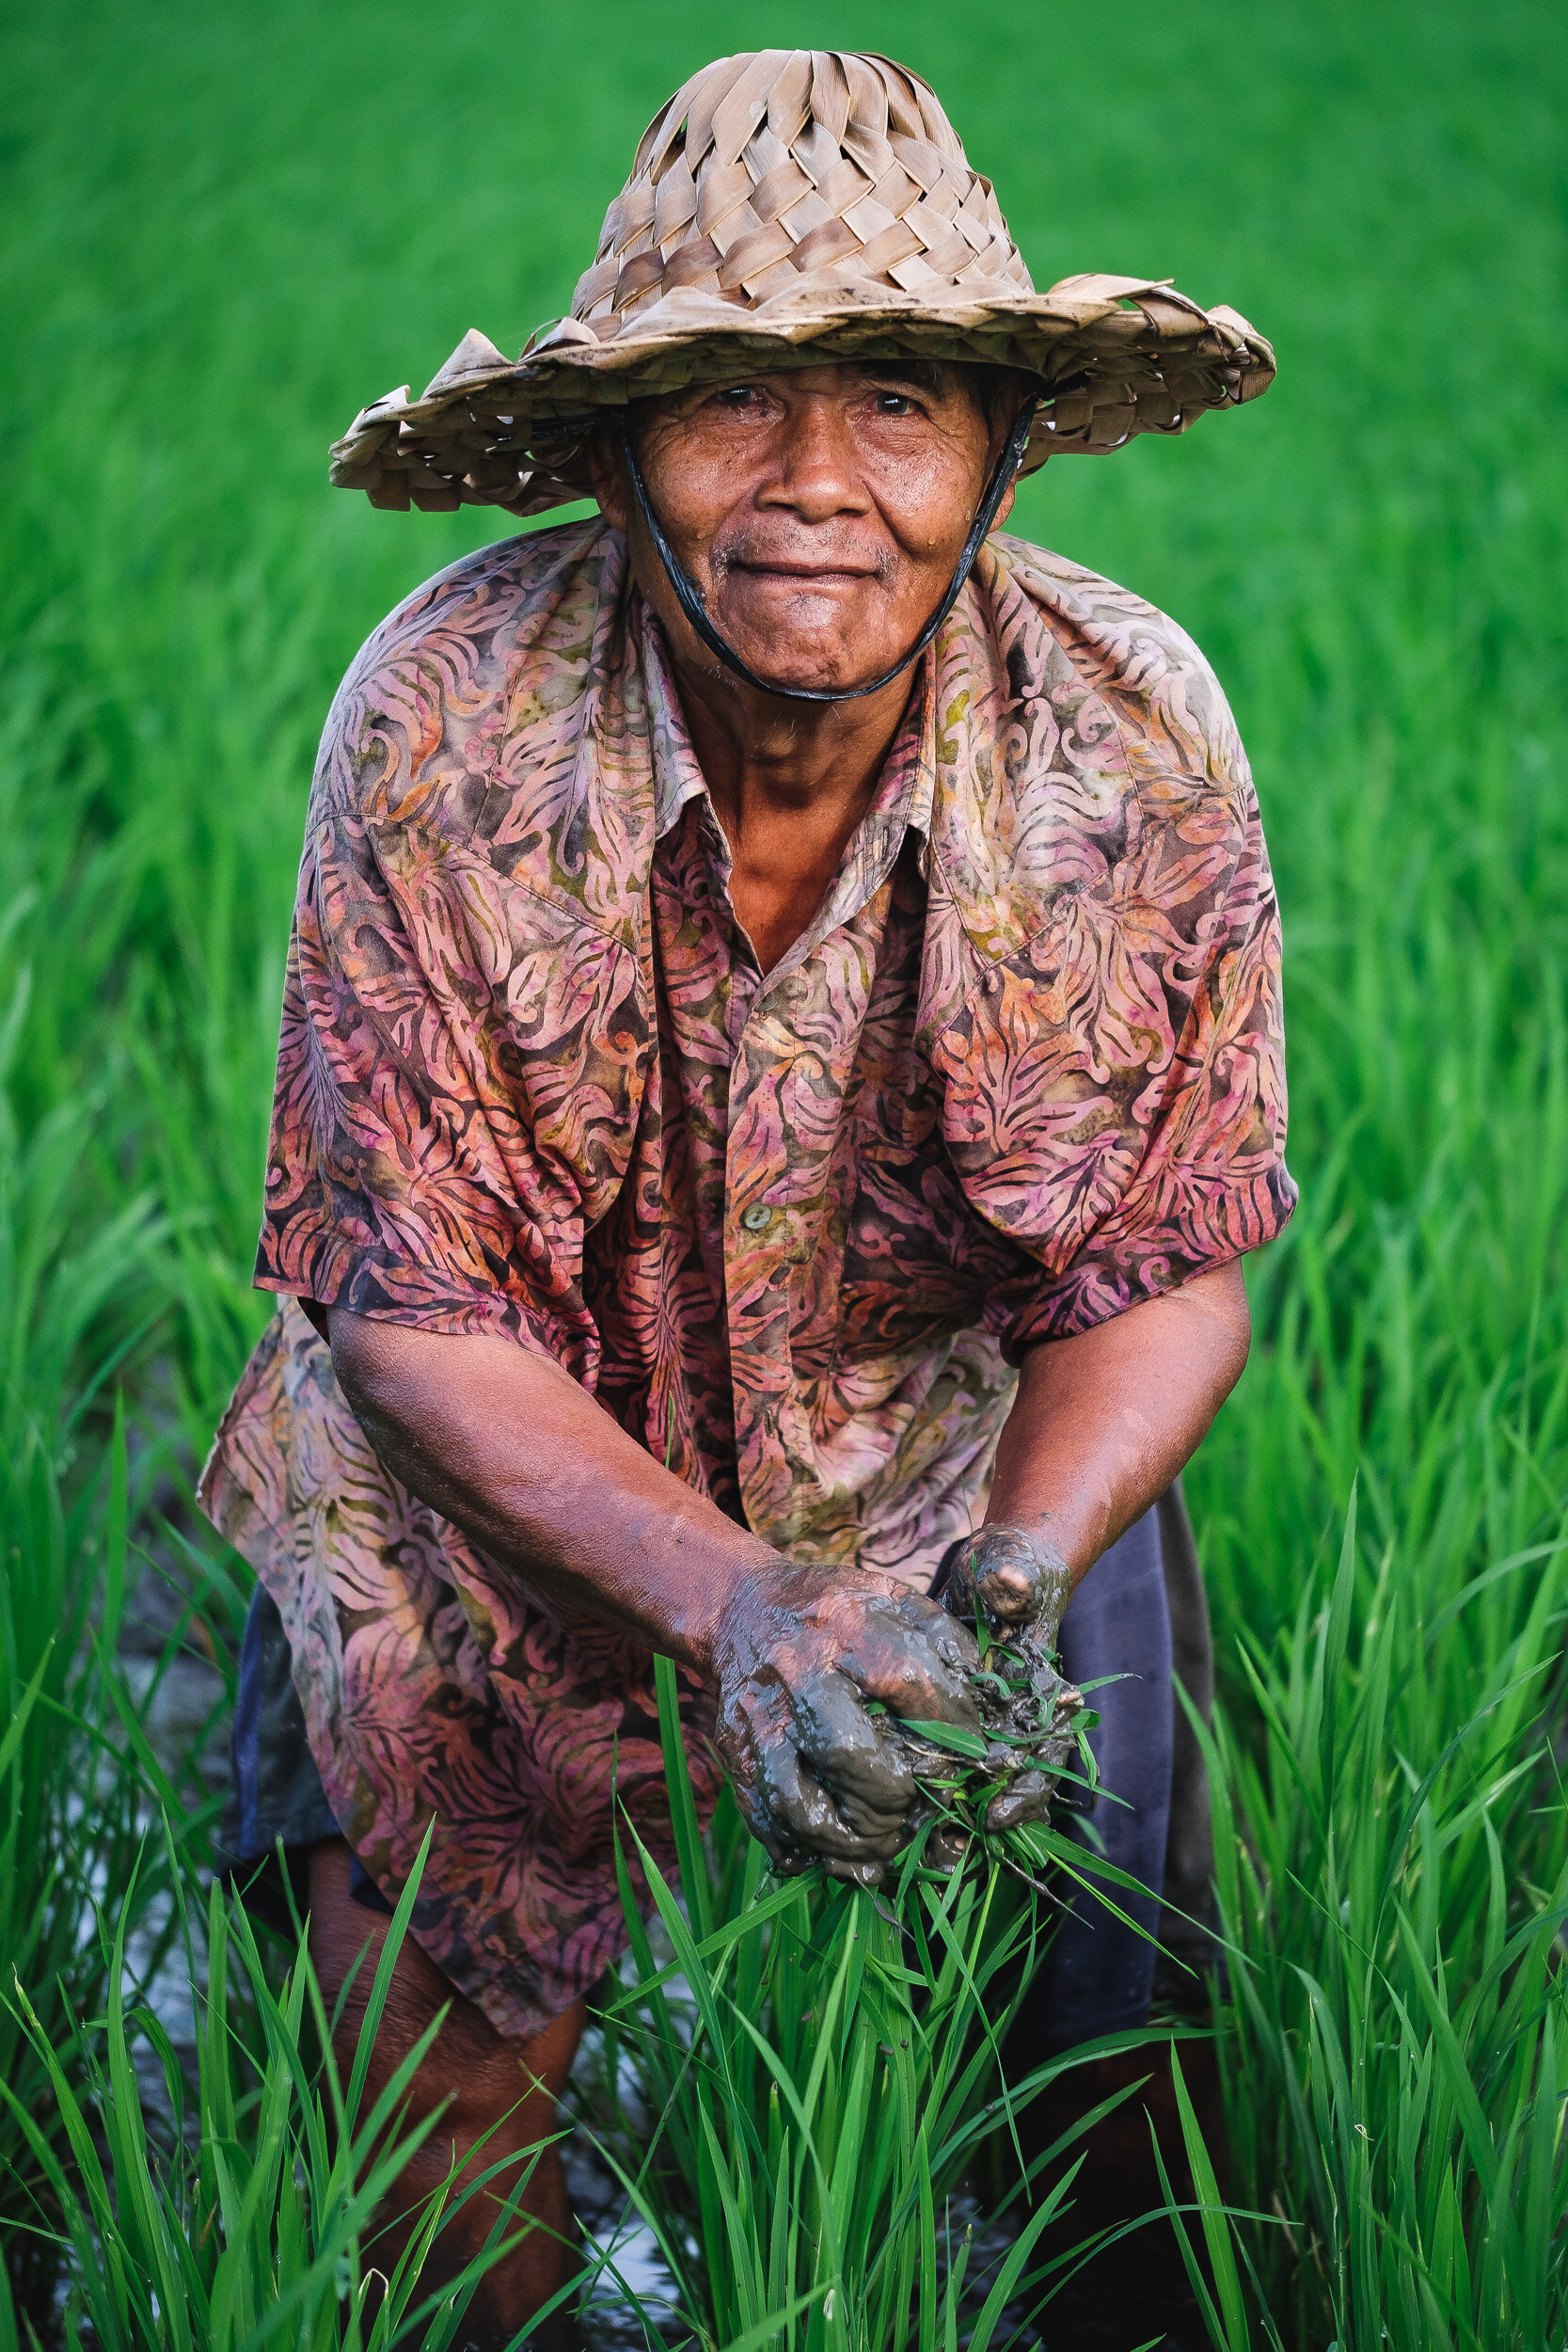 A curious farmer in ubud, Bali - Indonesia.